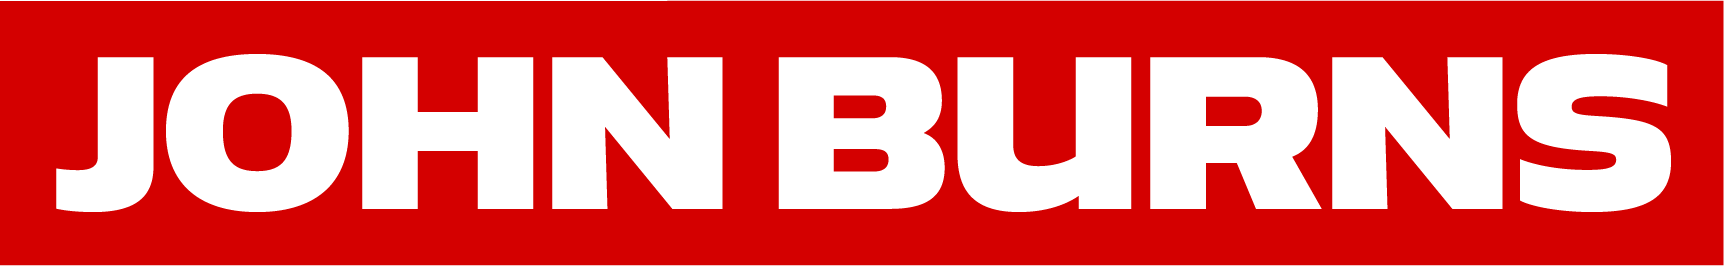 John Burns logo